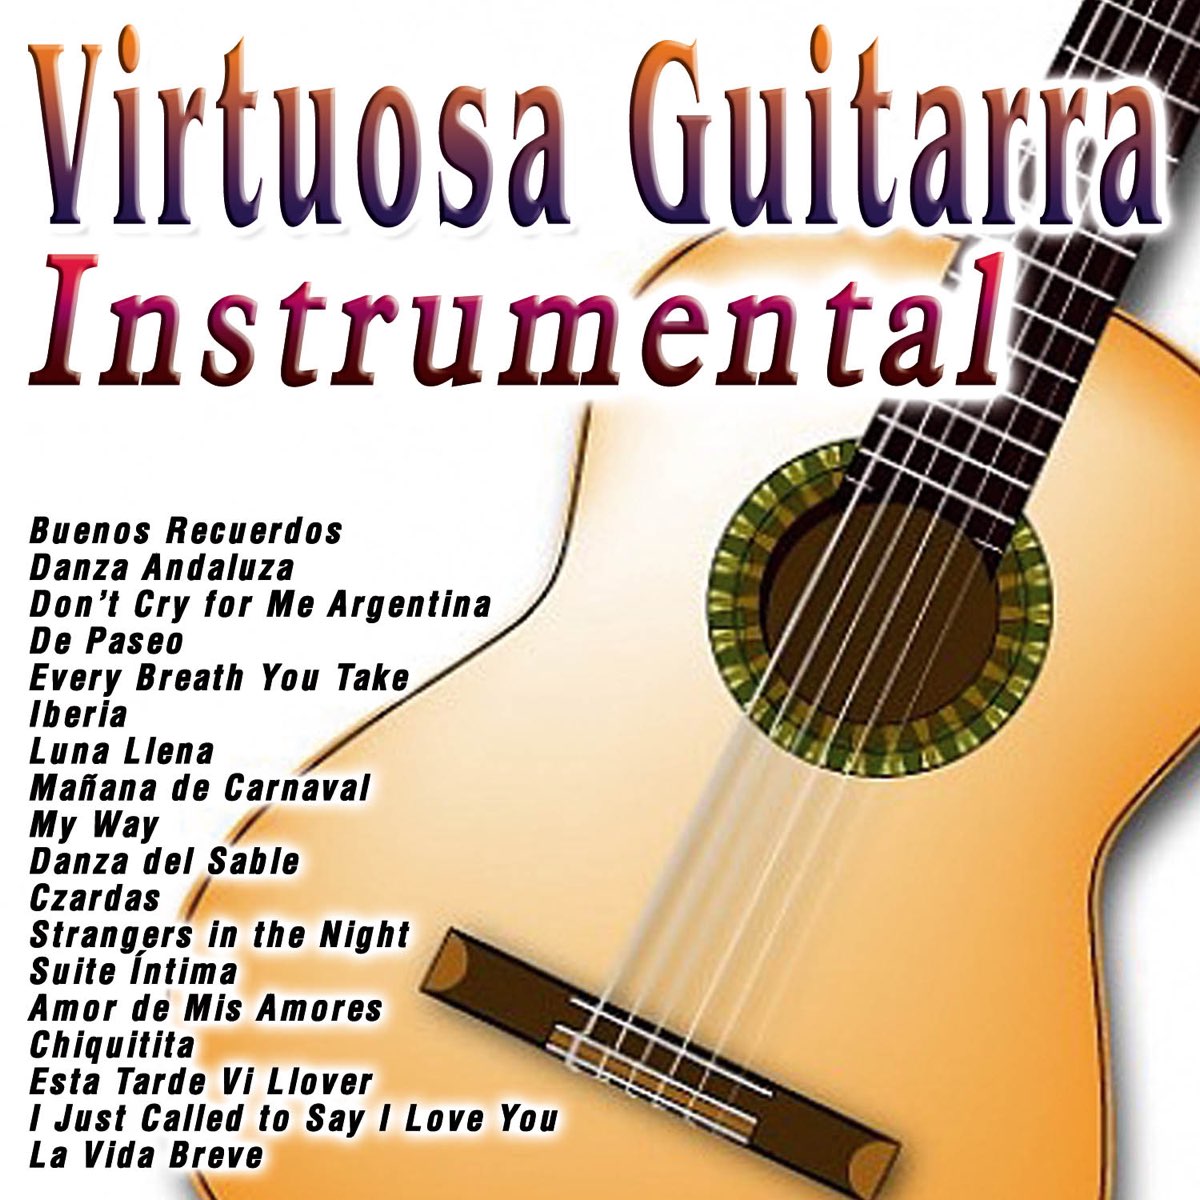 Virtuosa Guitarra: Instrumental by Sergi Vicente on Apple Music